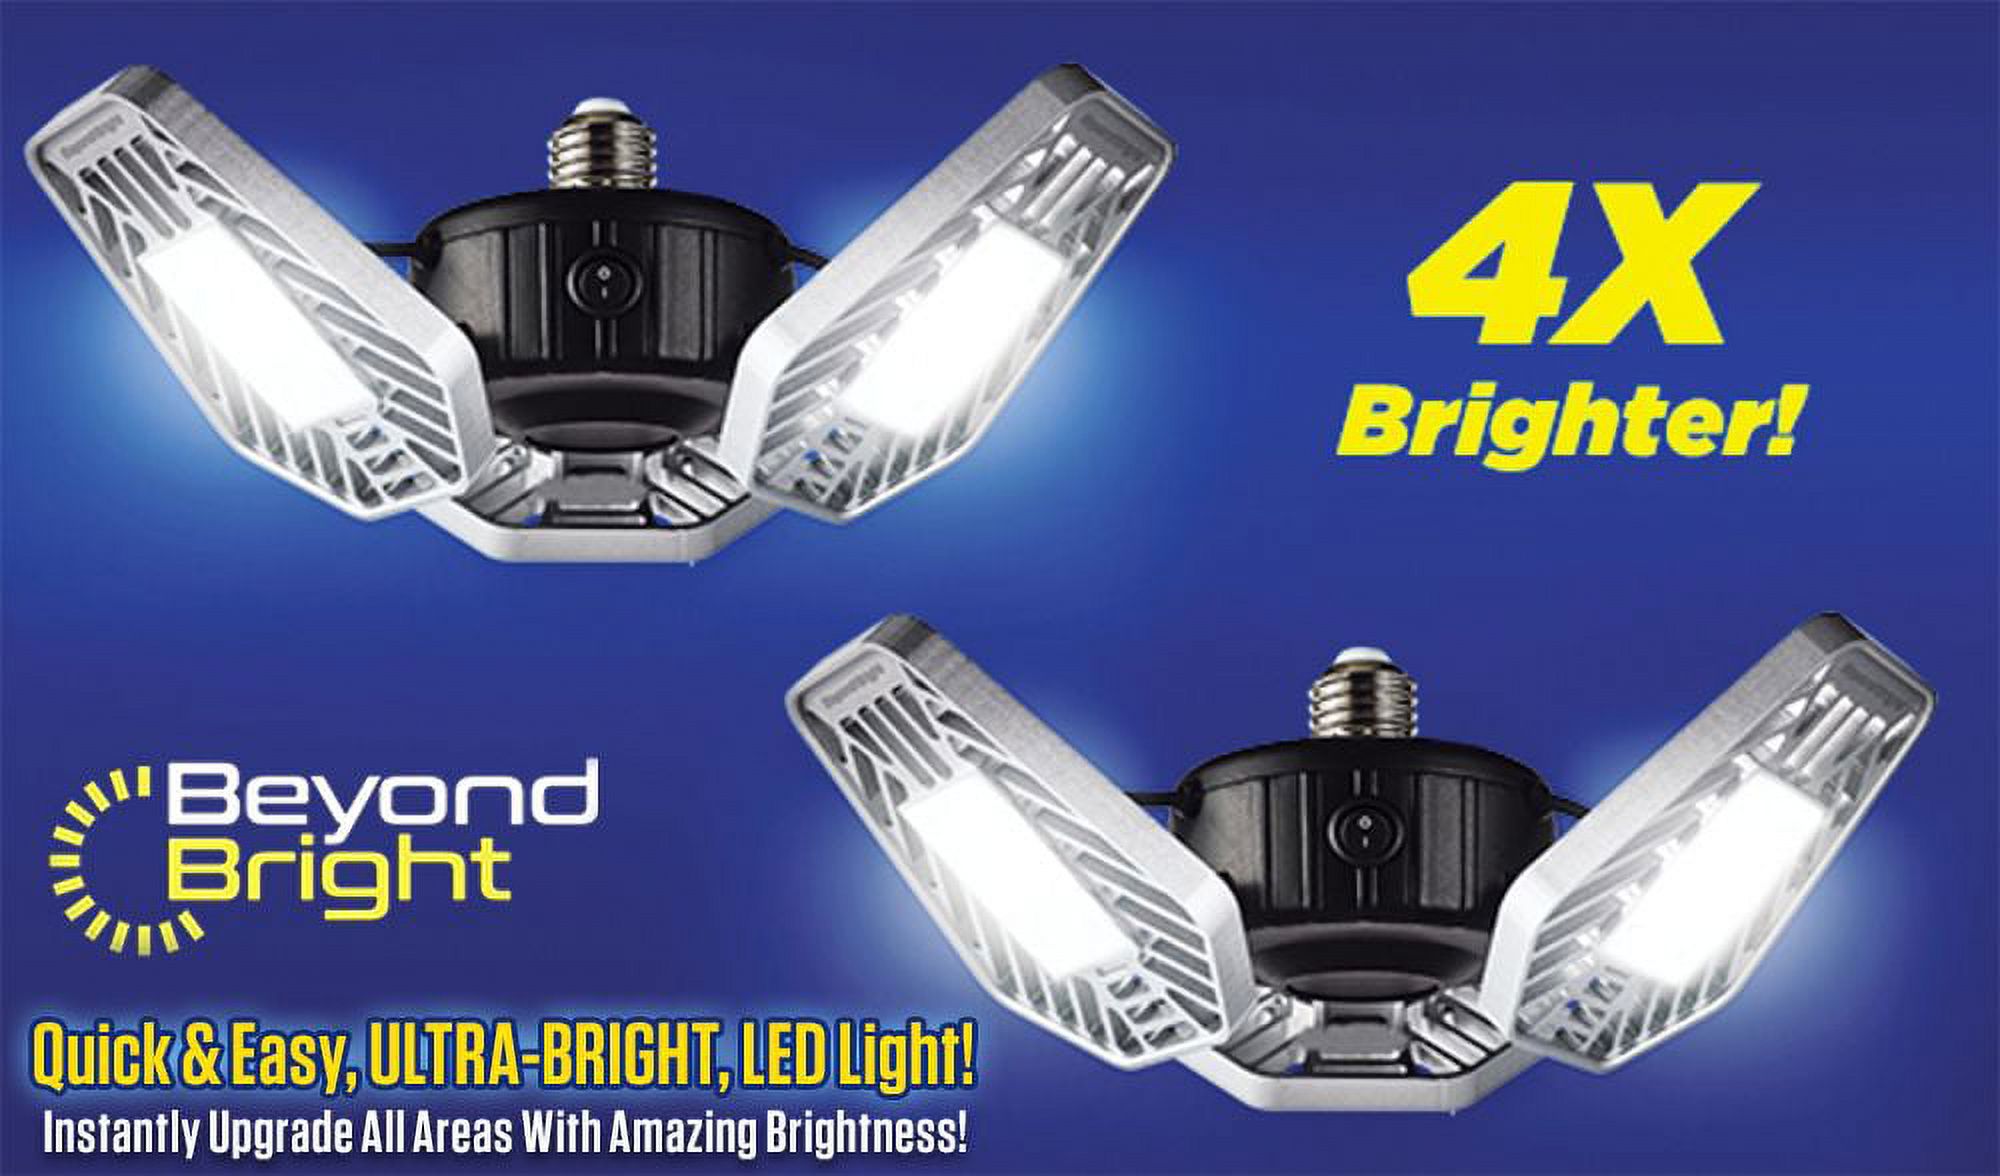 Pack Beyond Bright LED Garage Light, Work Shop Light, As Seen on TV 